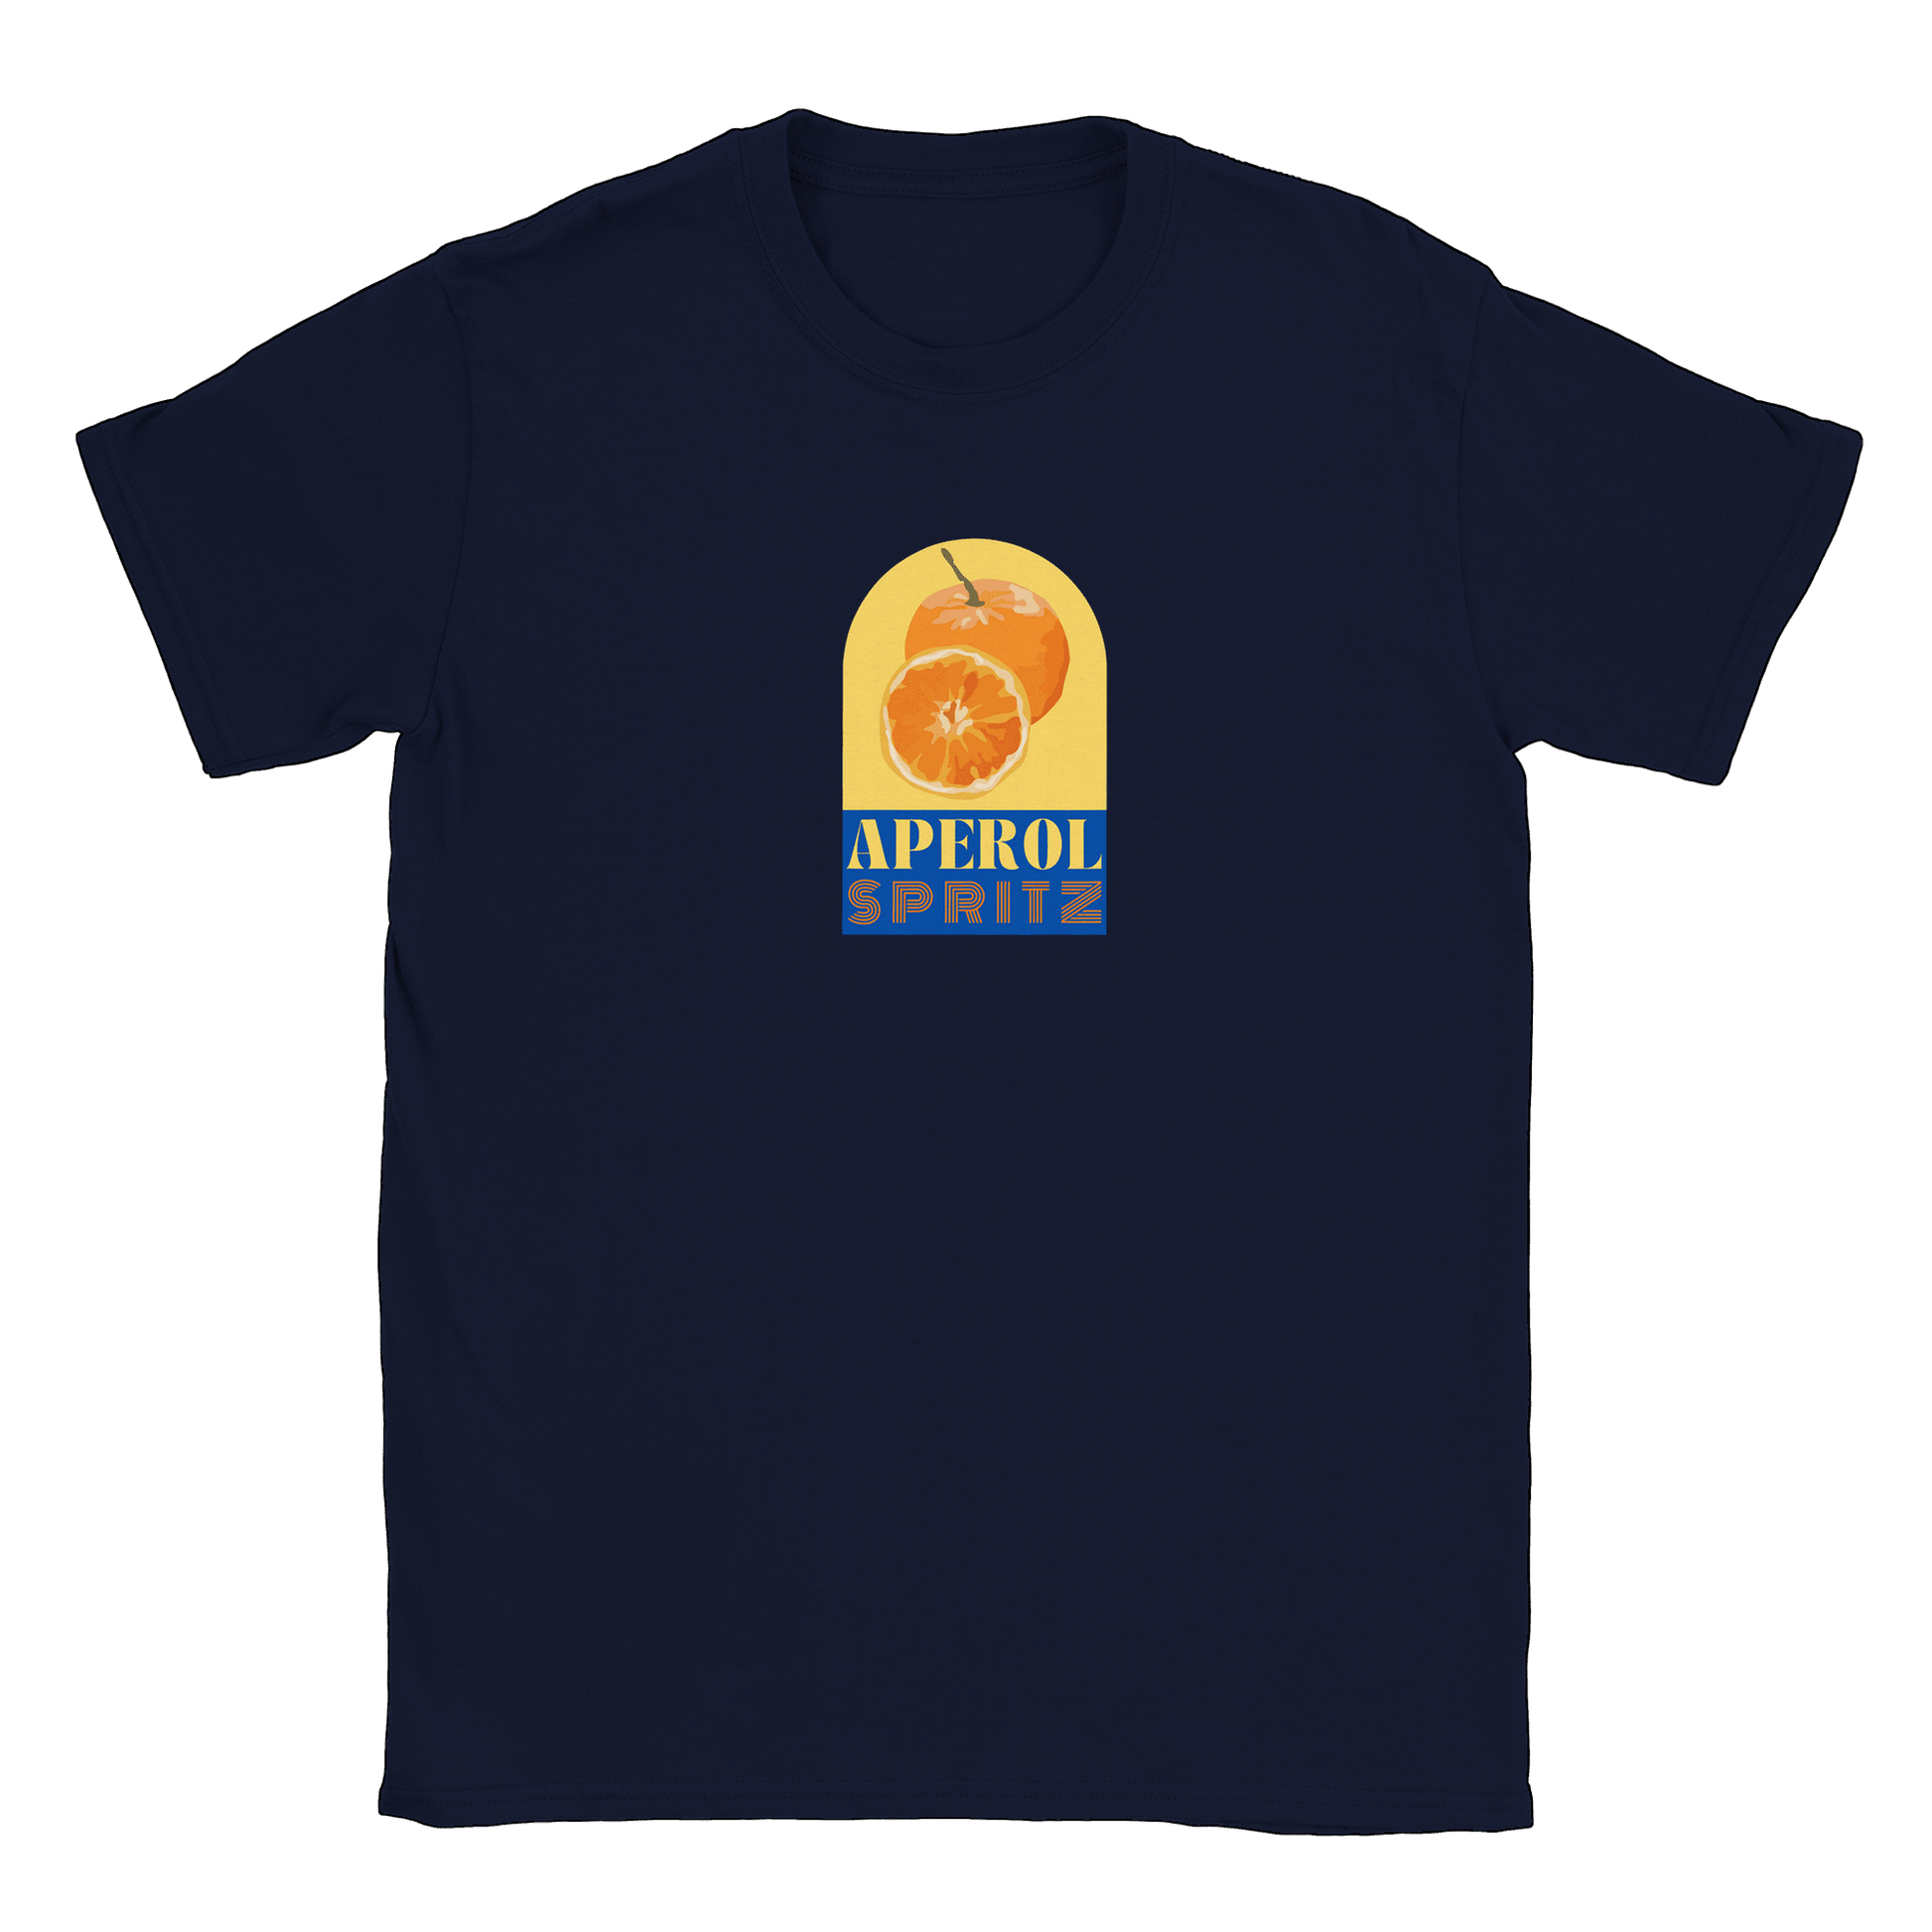 Aperol Spritz - T-shirt Navy